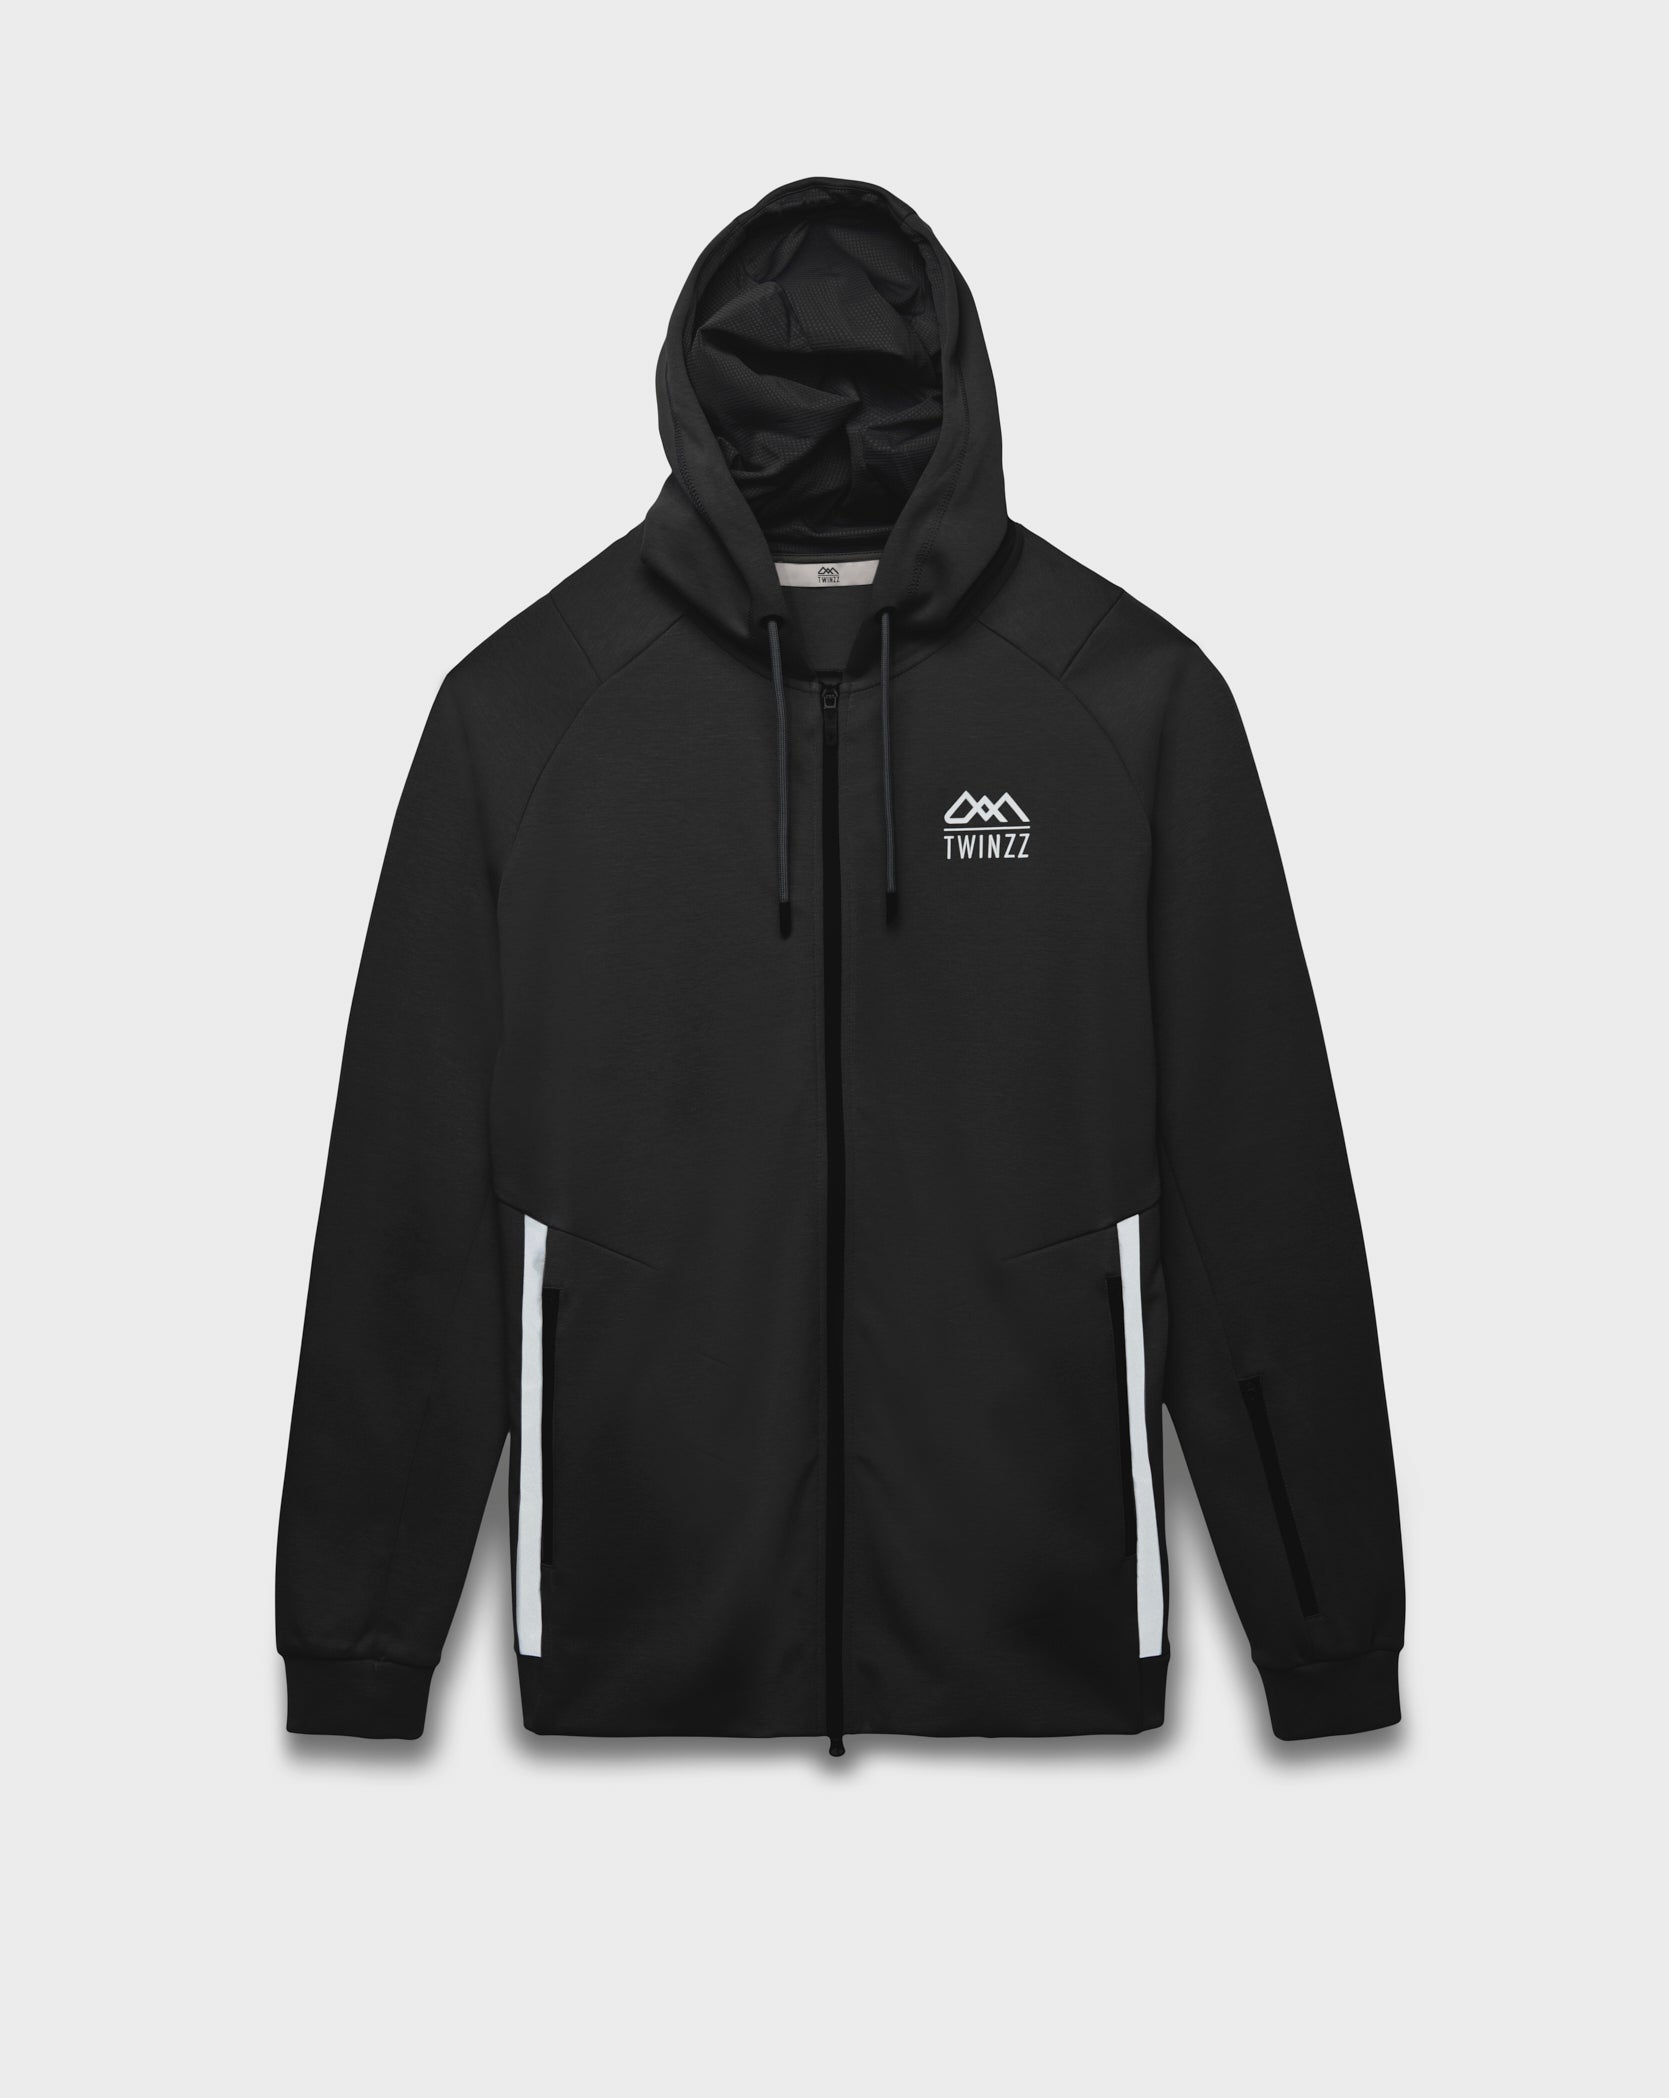 Twinzz black tech hoodie